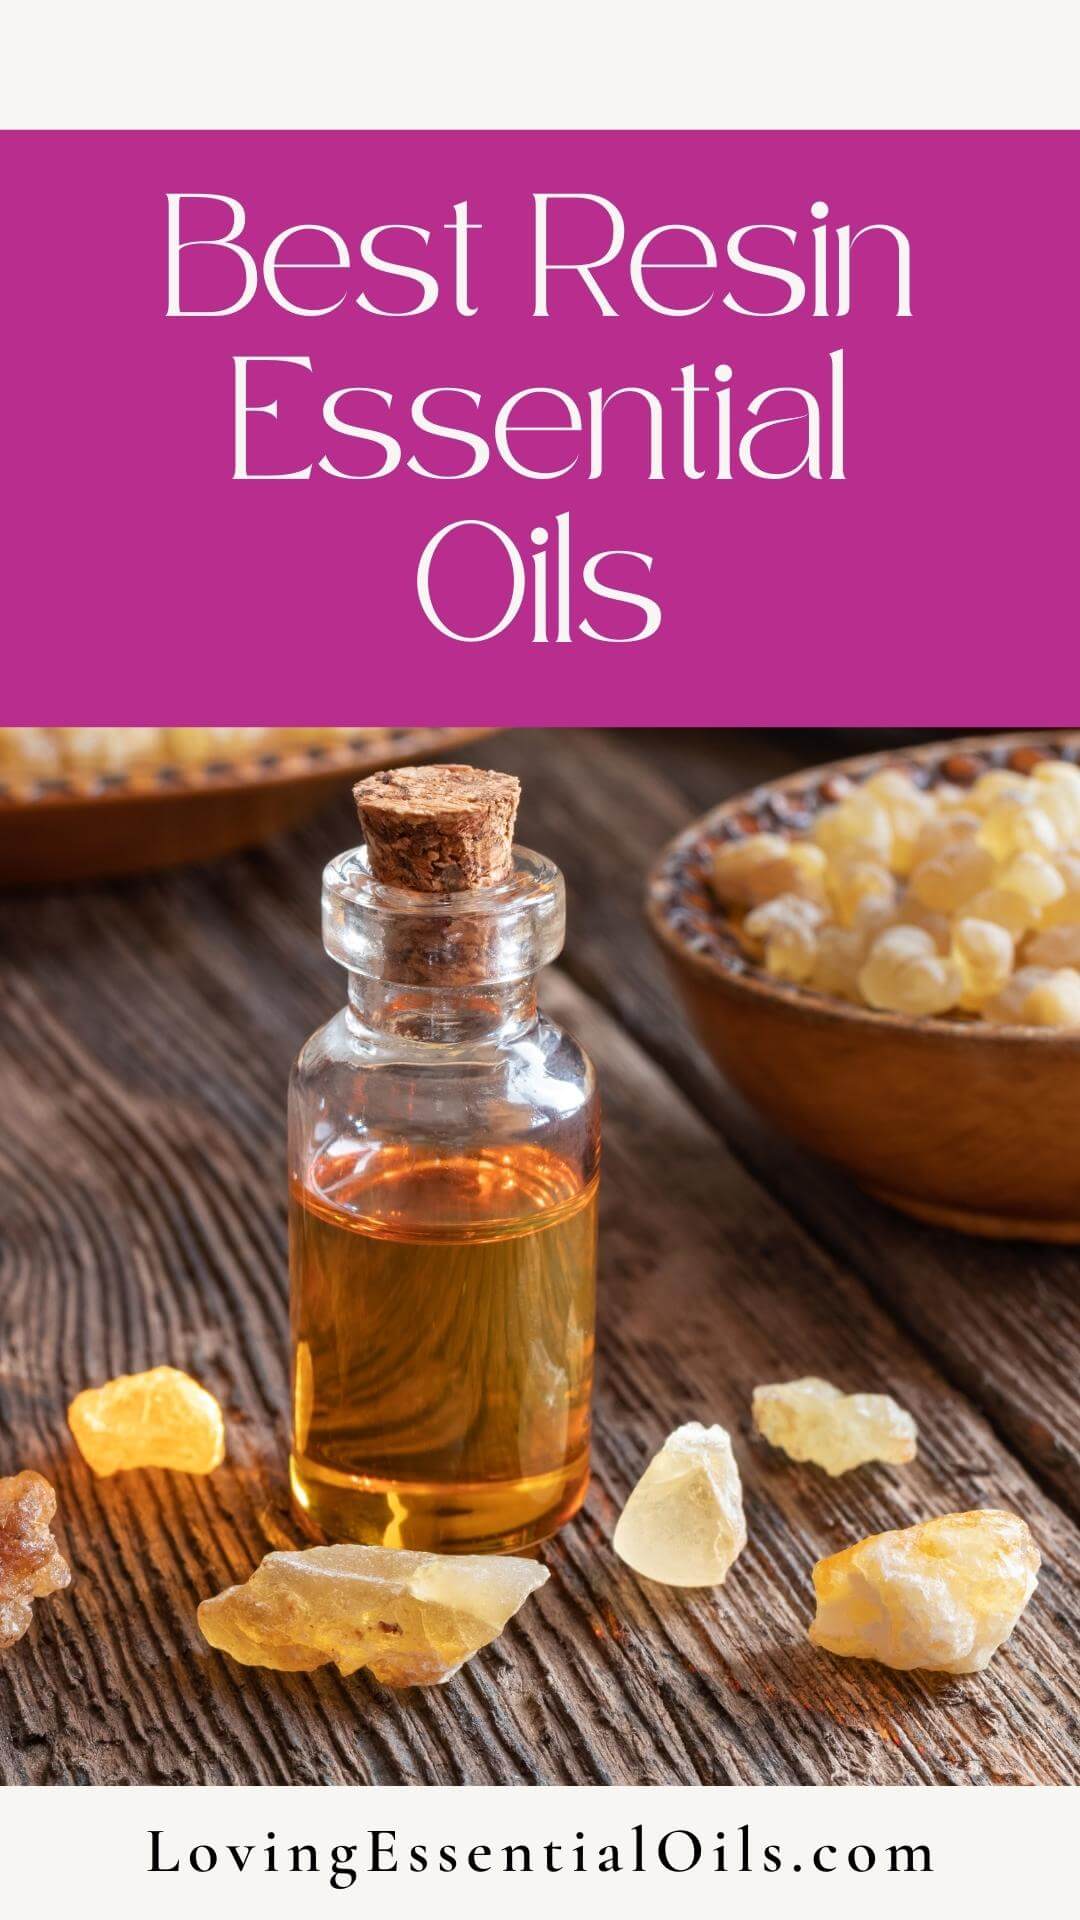 Best Resin Essential Oils by Loving Essential Oils